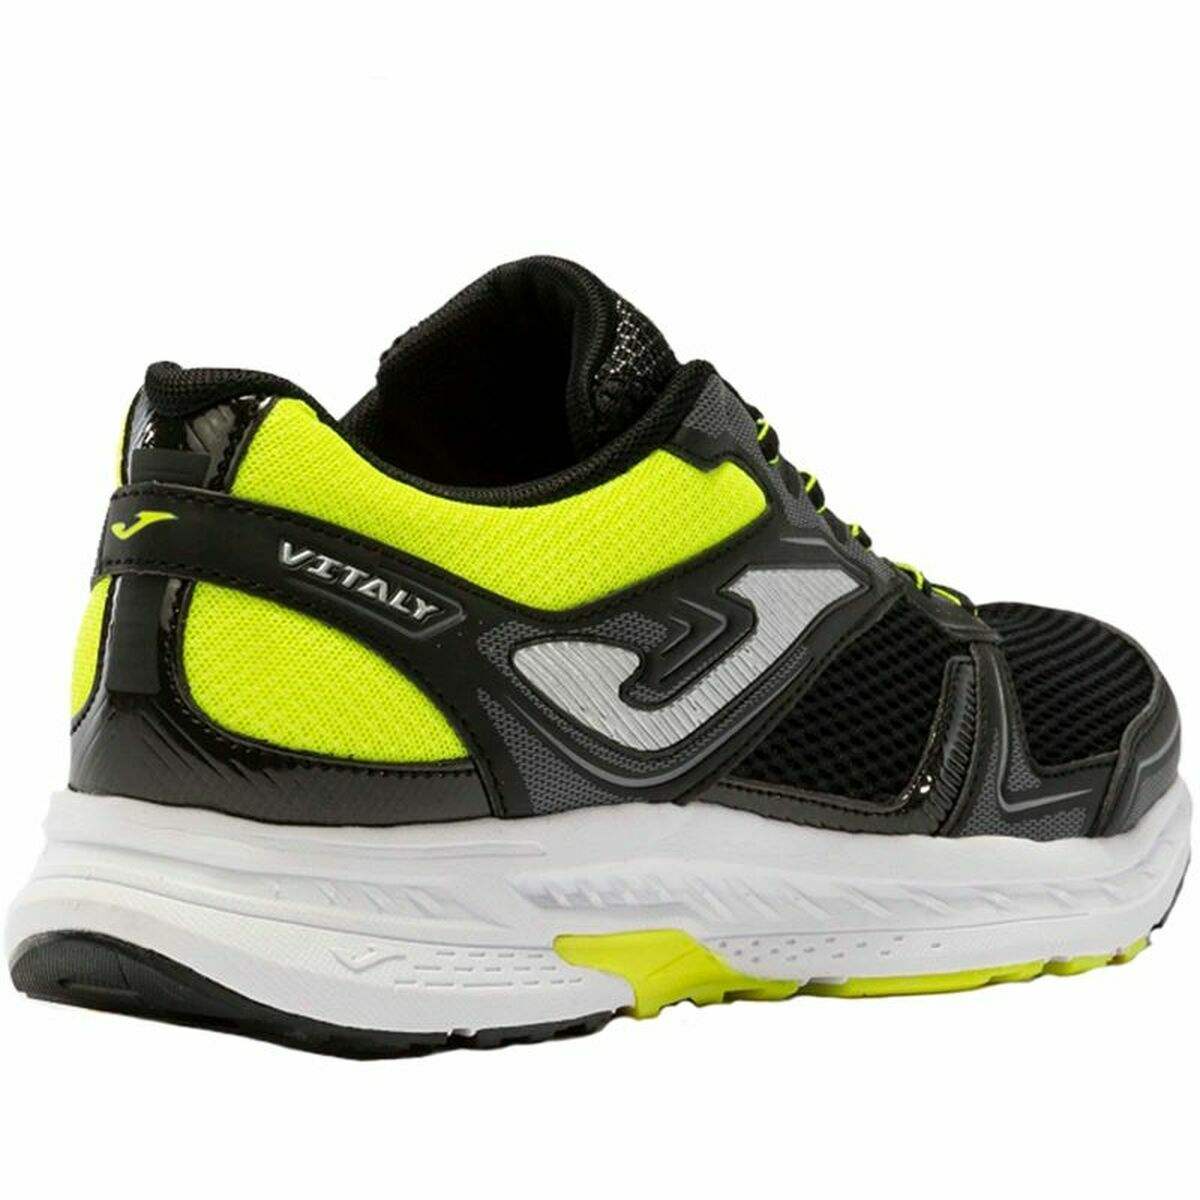 Chaussures de Running pour Adultes Joma Sport R.Vitaly Noir - Joma Sport - Jardin D'Eyden - jardindeyden.fr